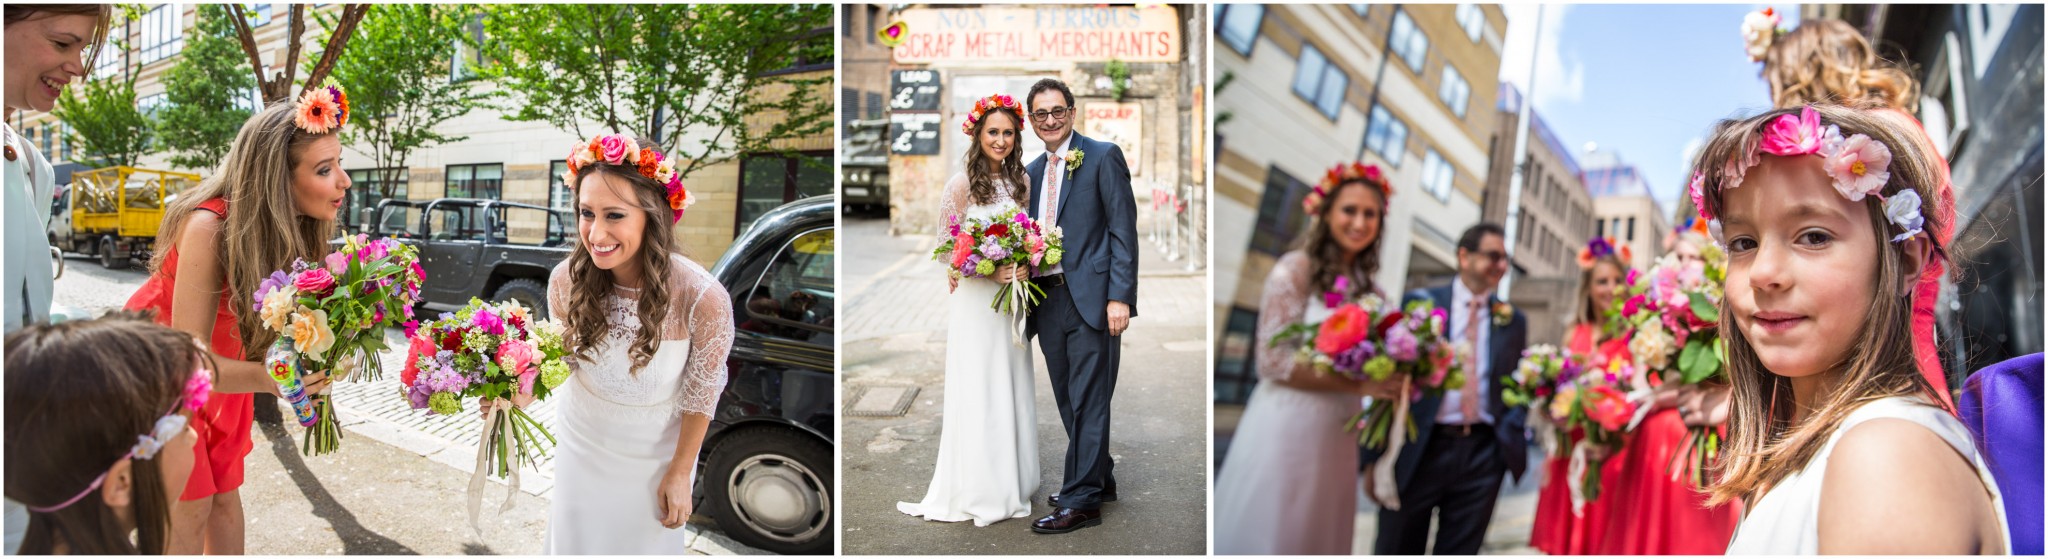 Islington Metal Works Wedding - Bride & Bridemaids before the ceremony